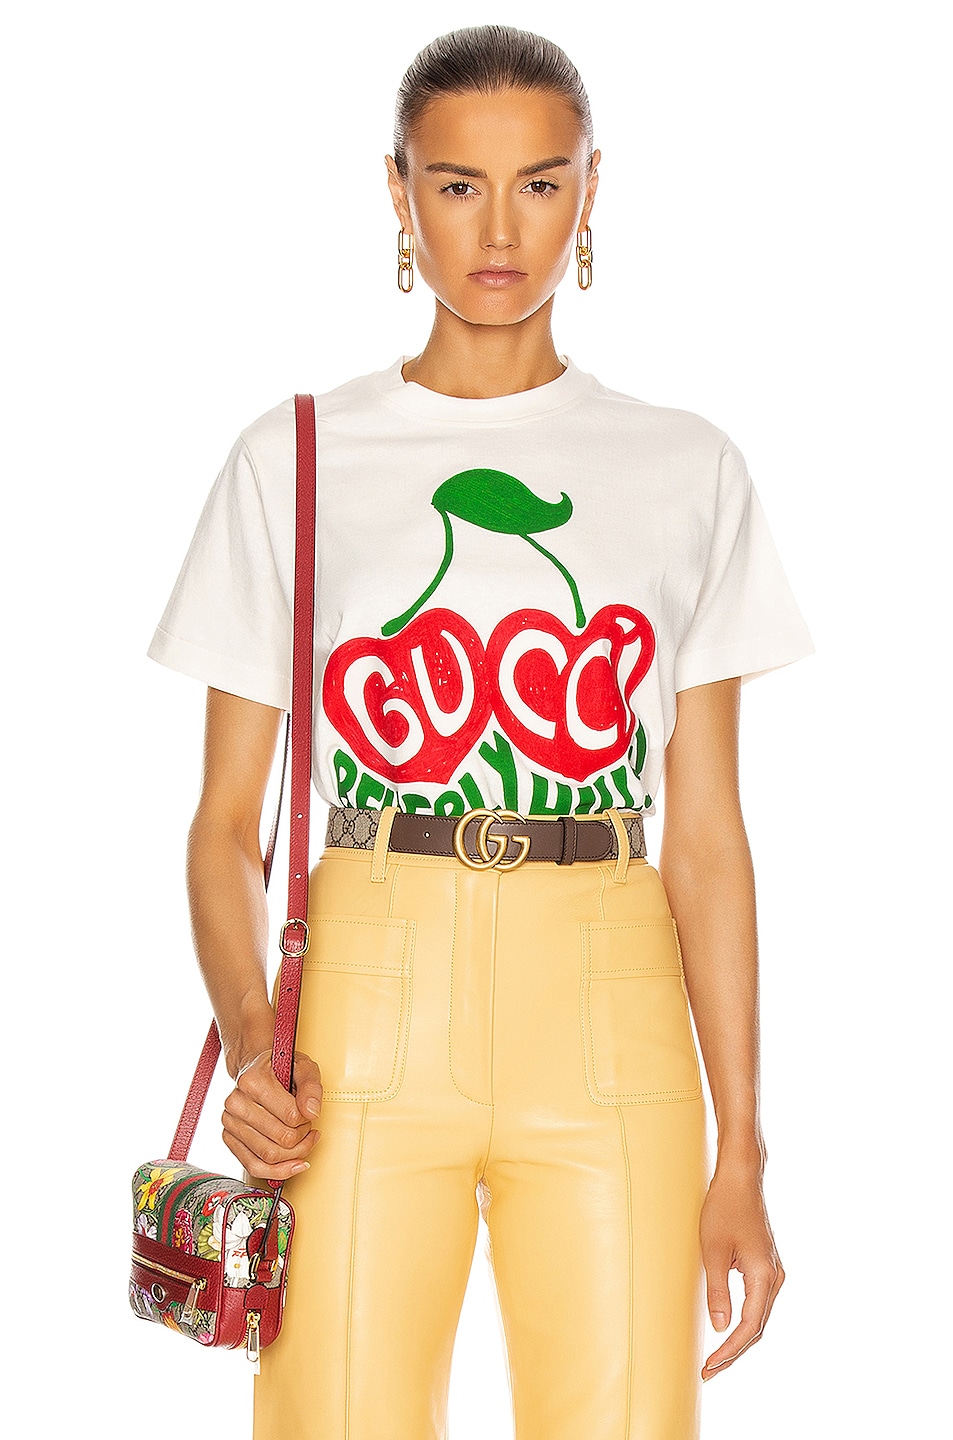 Gucci Cherry T Shirt In Sunlight Fwrd 